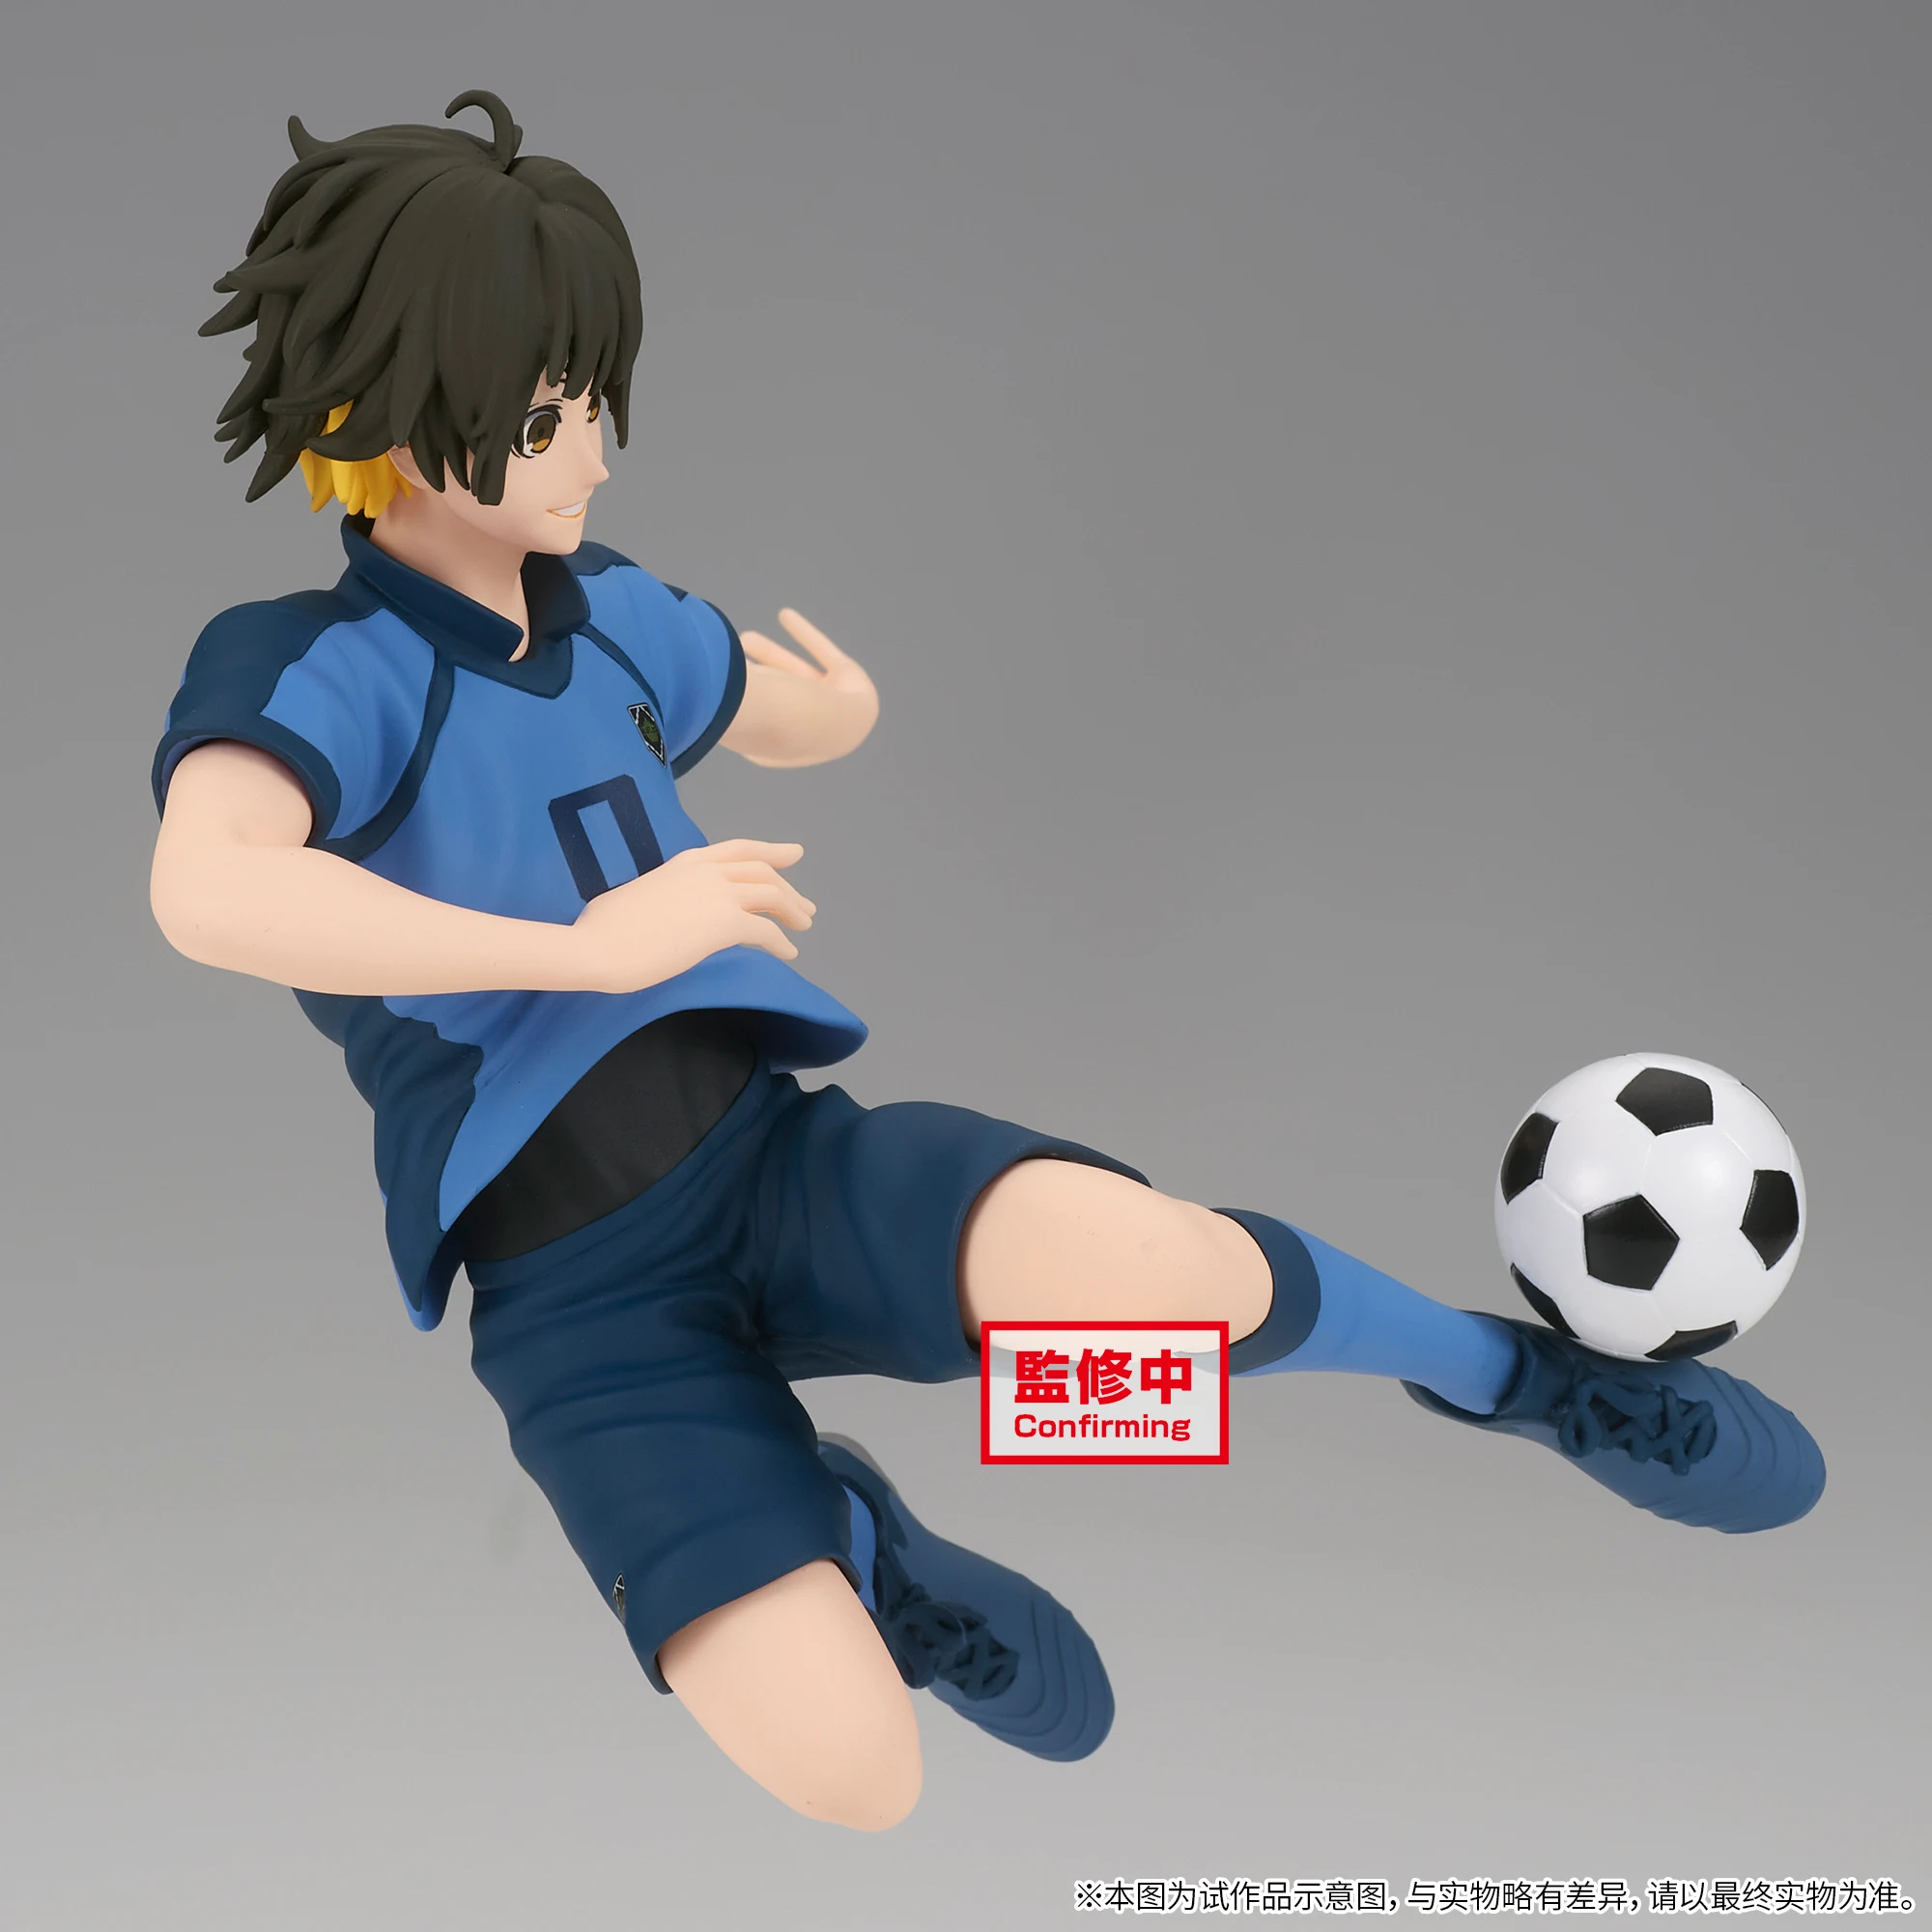 Blue Lock China Kung fu! Clear File Meguru Bachira (Anime Toy) -  HobbySearch Anime Goods Store